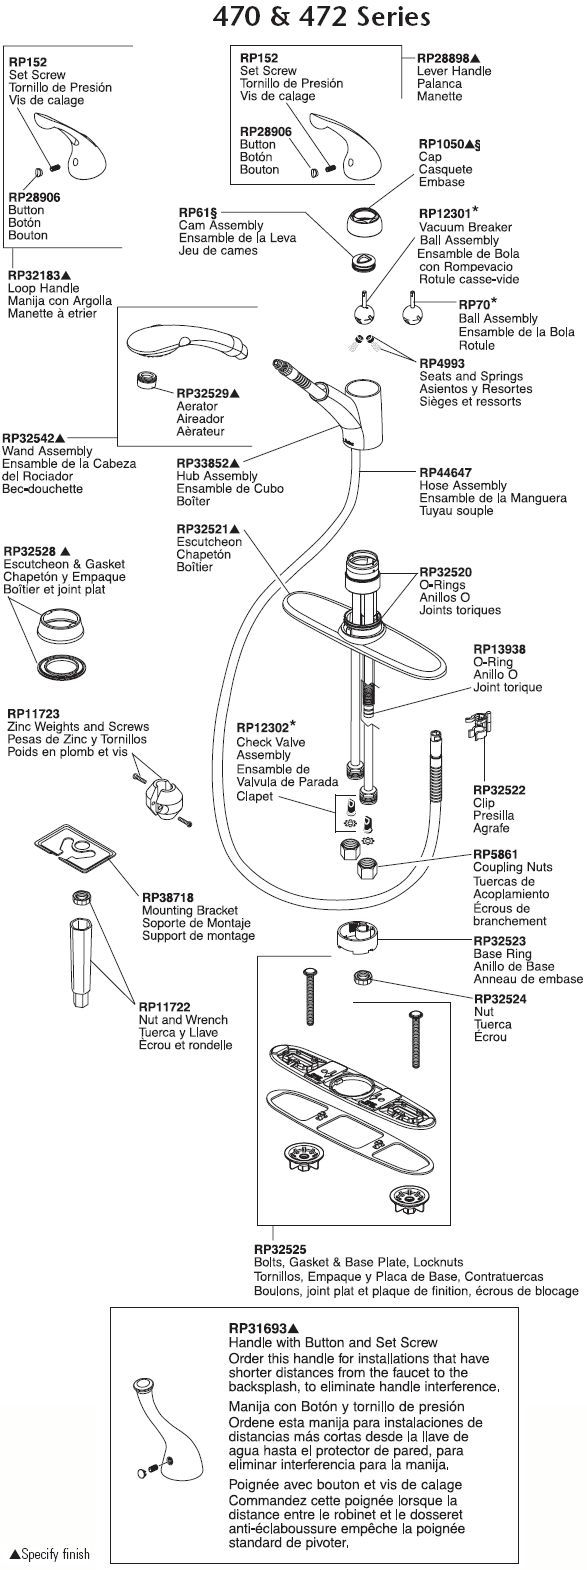 Signature Single Handle Faucet Parts Diagram Models: 470 & 472